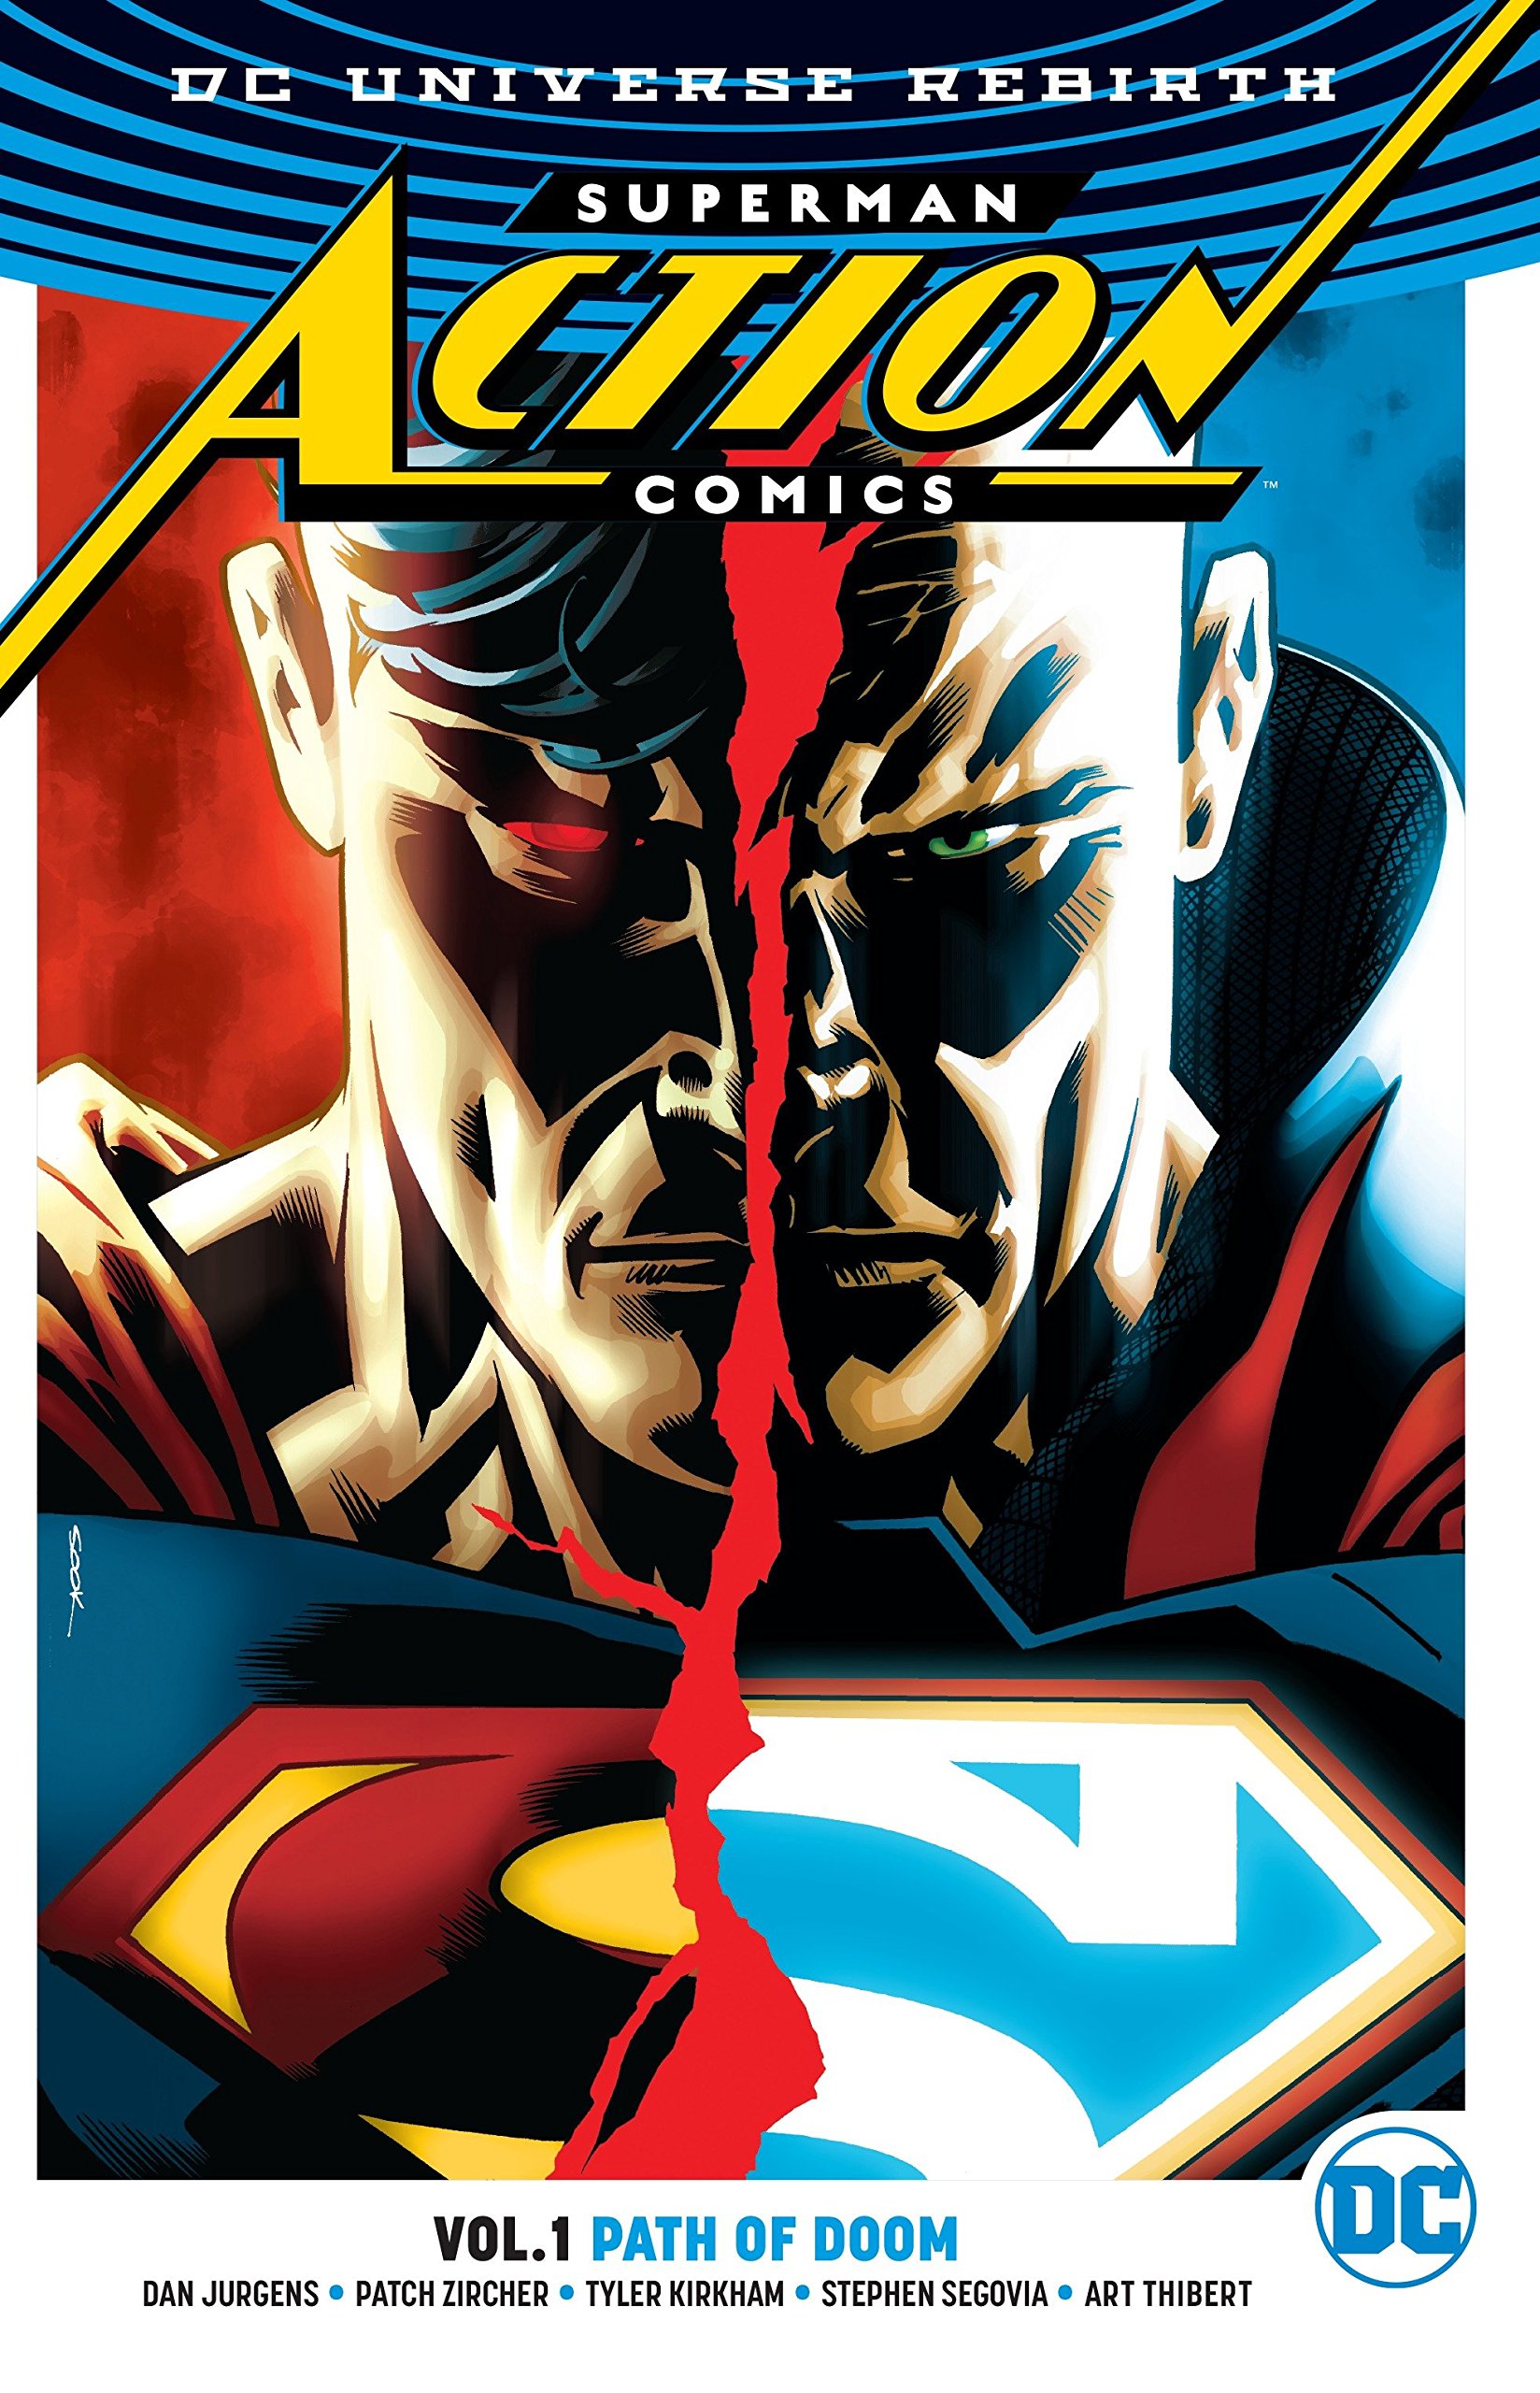 Superman Action Comics Graphic Novel Volume 1 Path of Doom (Rebirth)